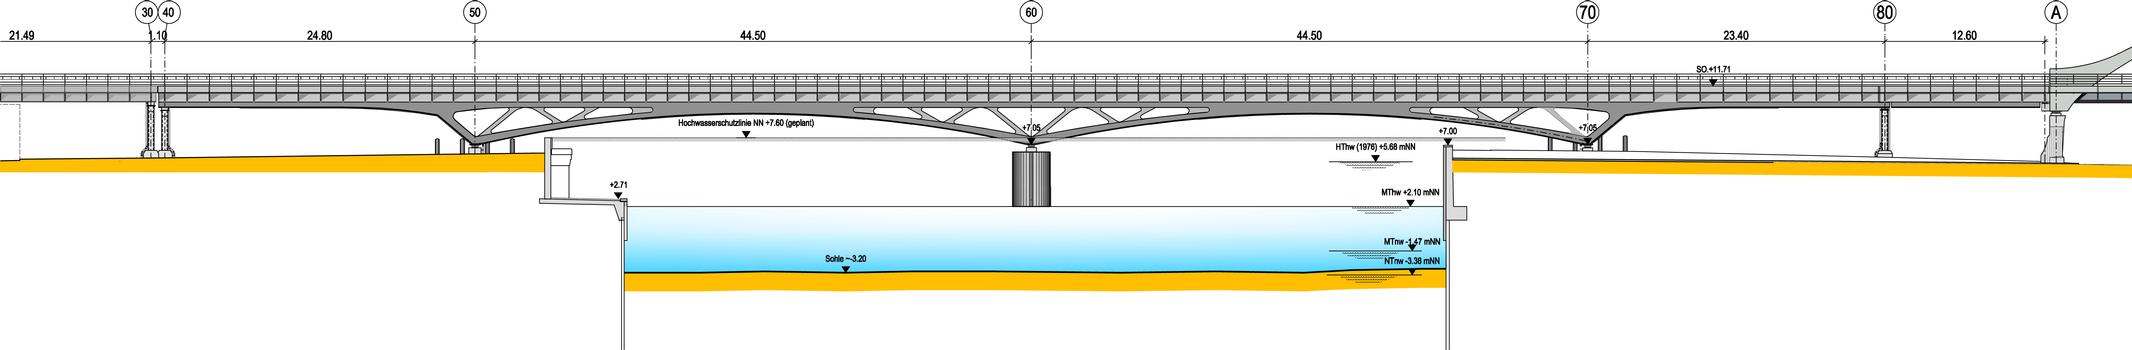 Binnenhafen Viaduct for Hamburg elevated transit systemElevation